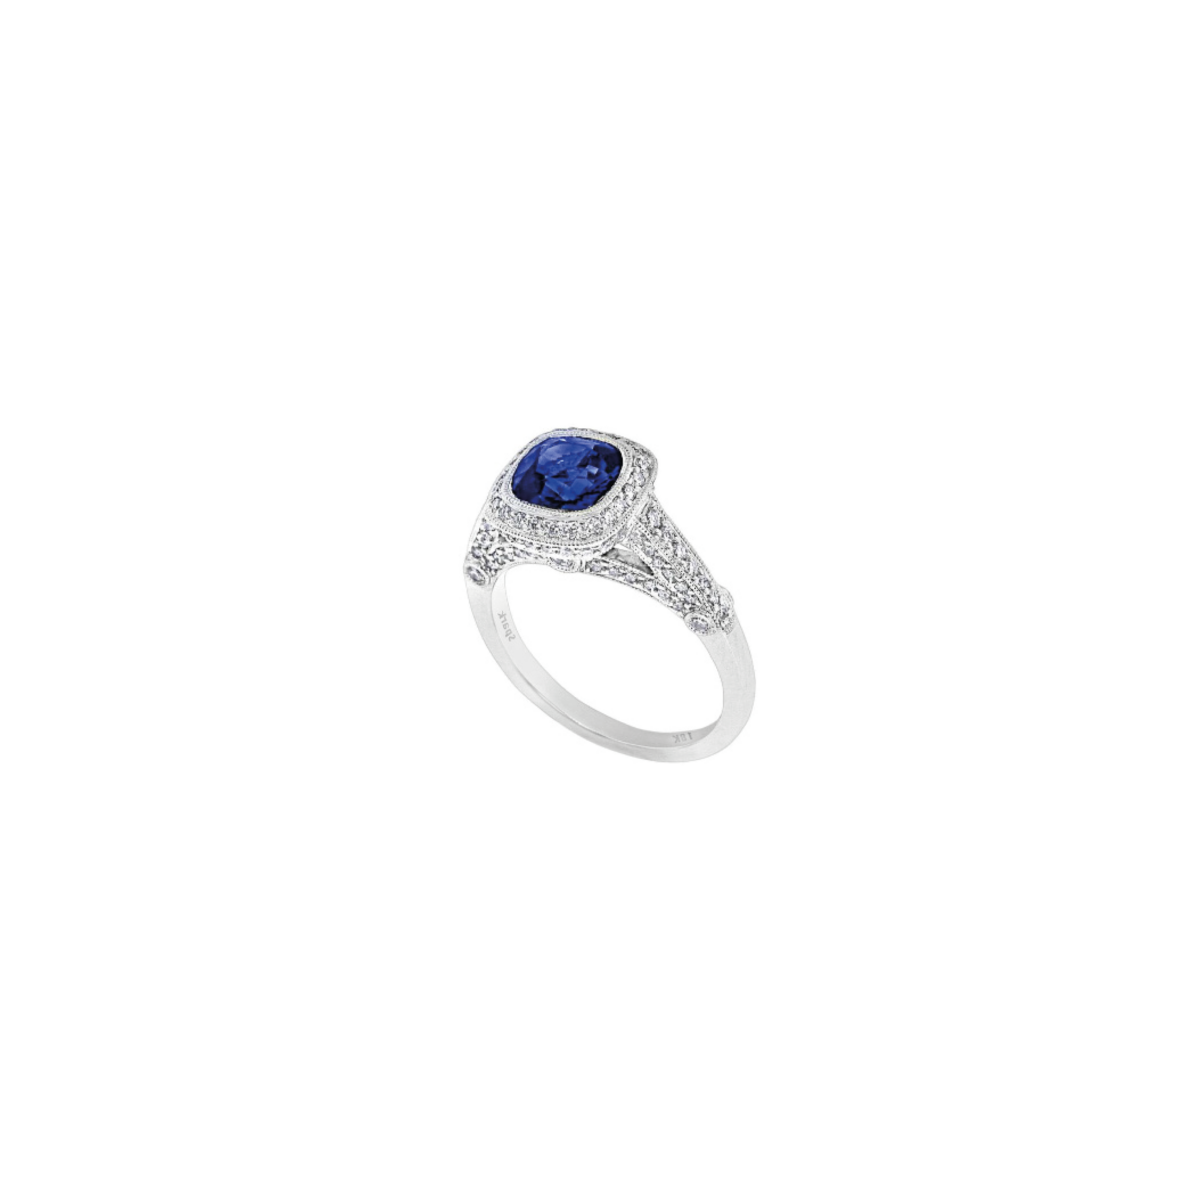 Ceylon sapphire diamond ring